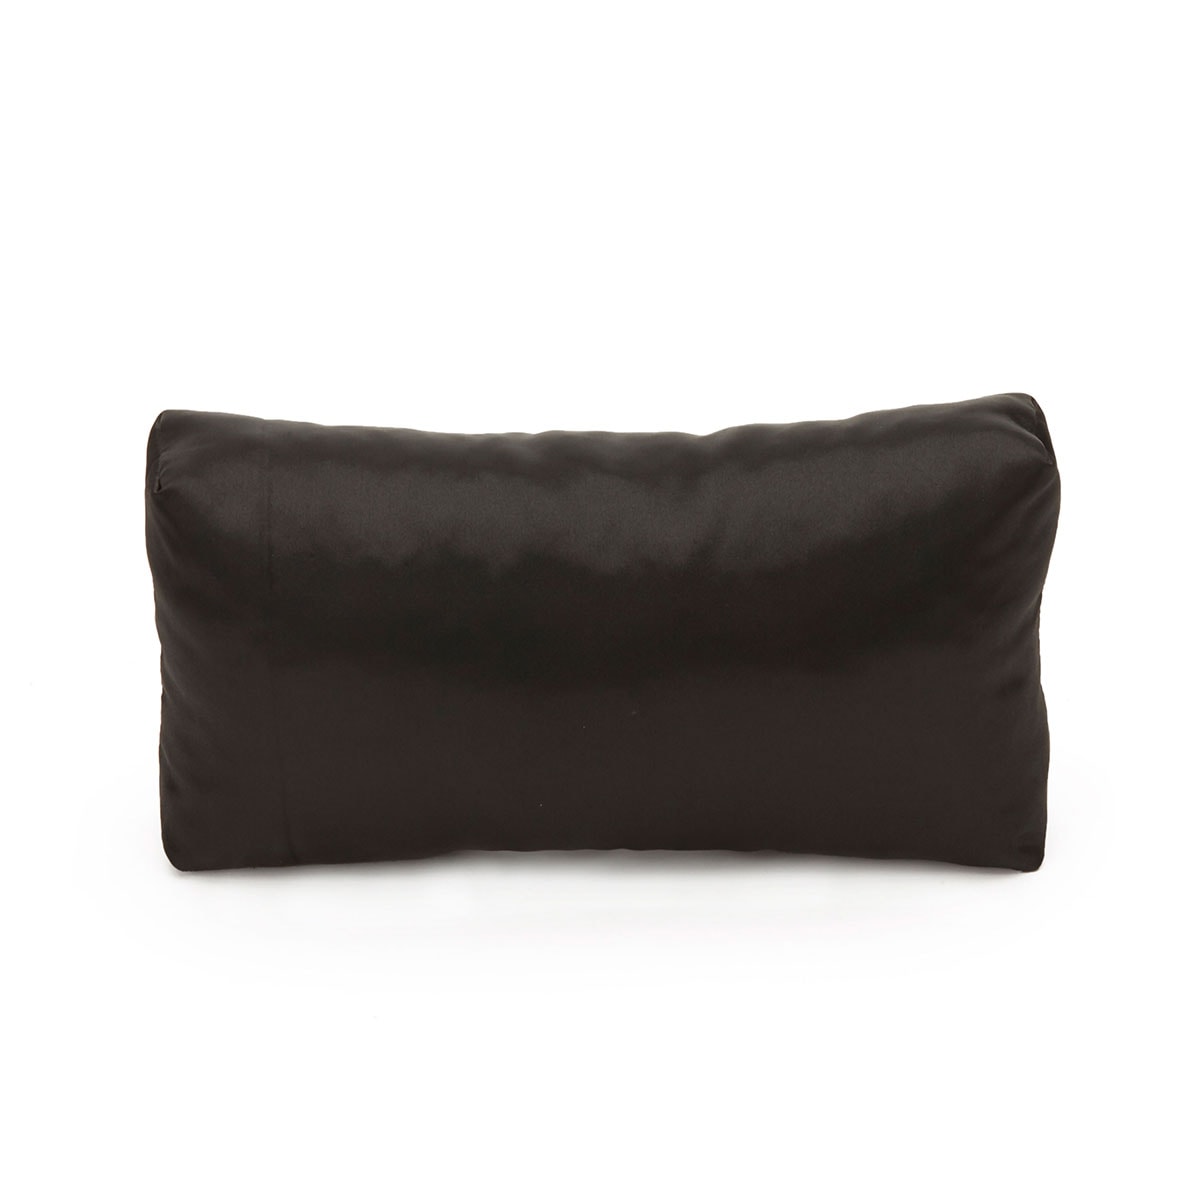 Bag-a-vie Purse Pillow Insert Fits Chanel M/L Flap for Handbag 